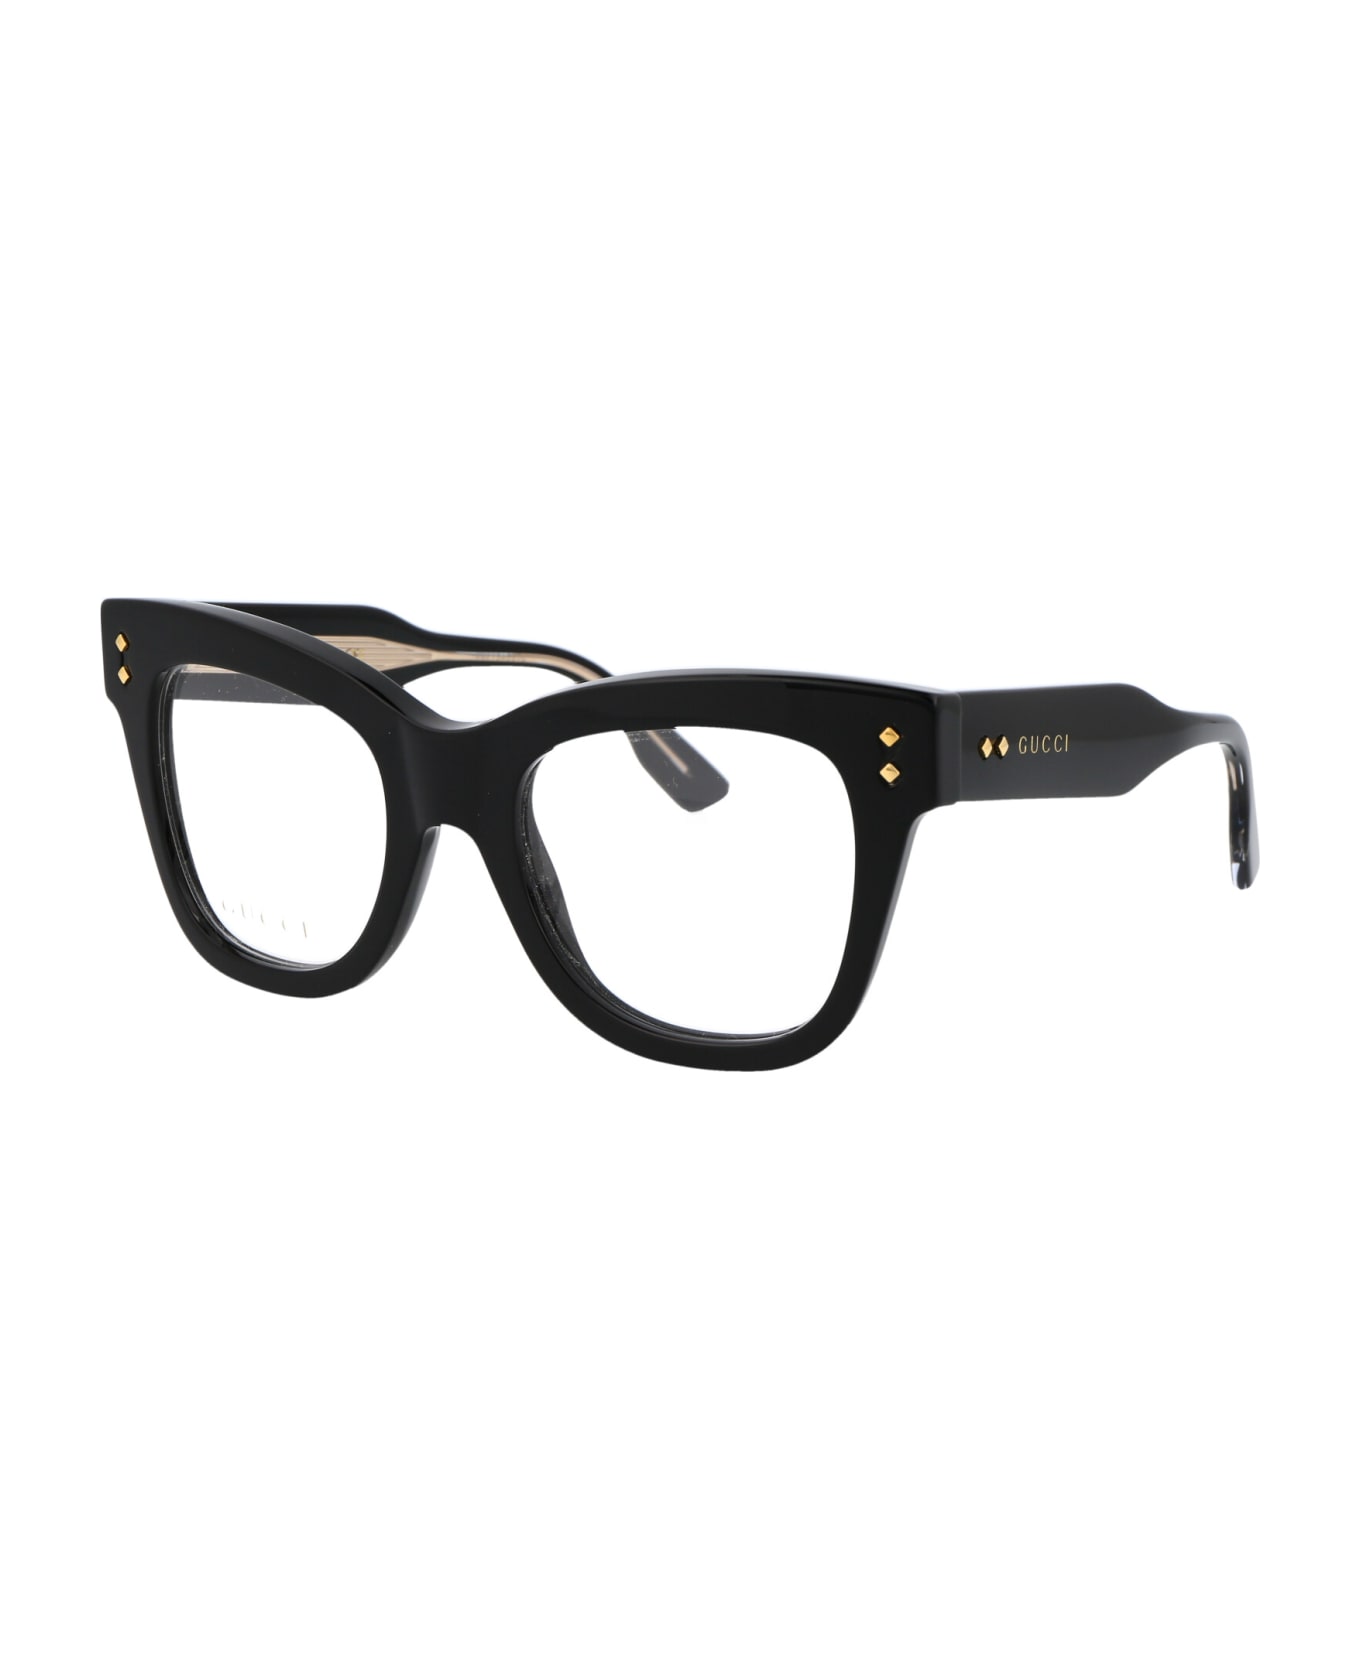 Gucci Eyewear Gg1082o Glasses - 001 BLACK BLACK TRANSPARENT アイウェア